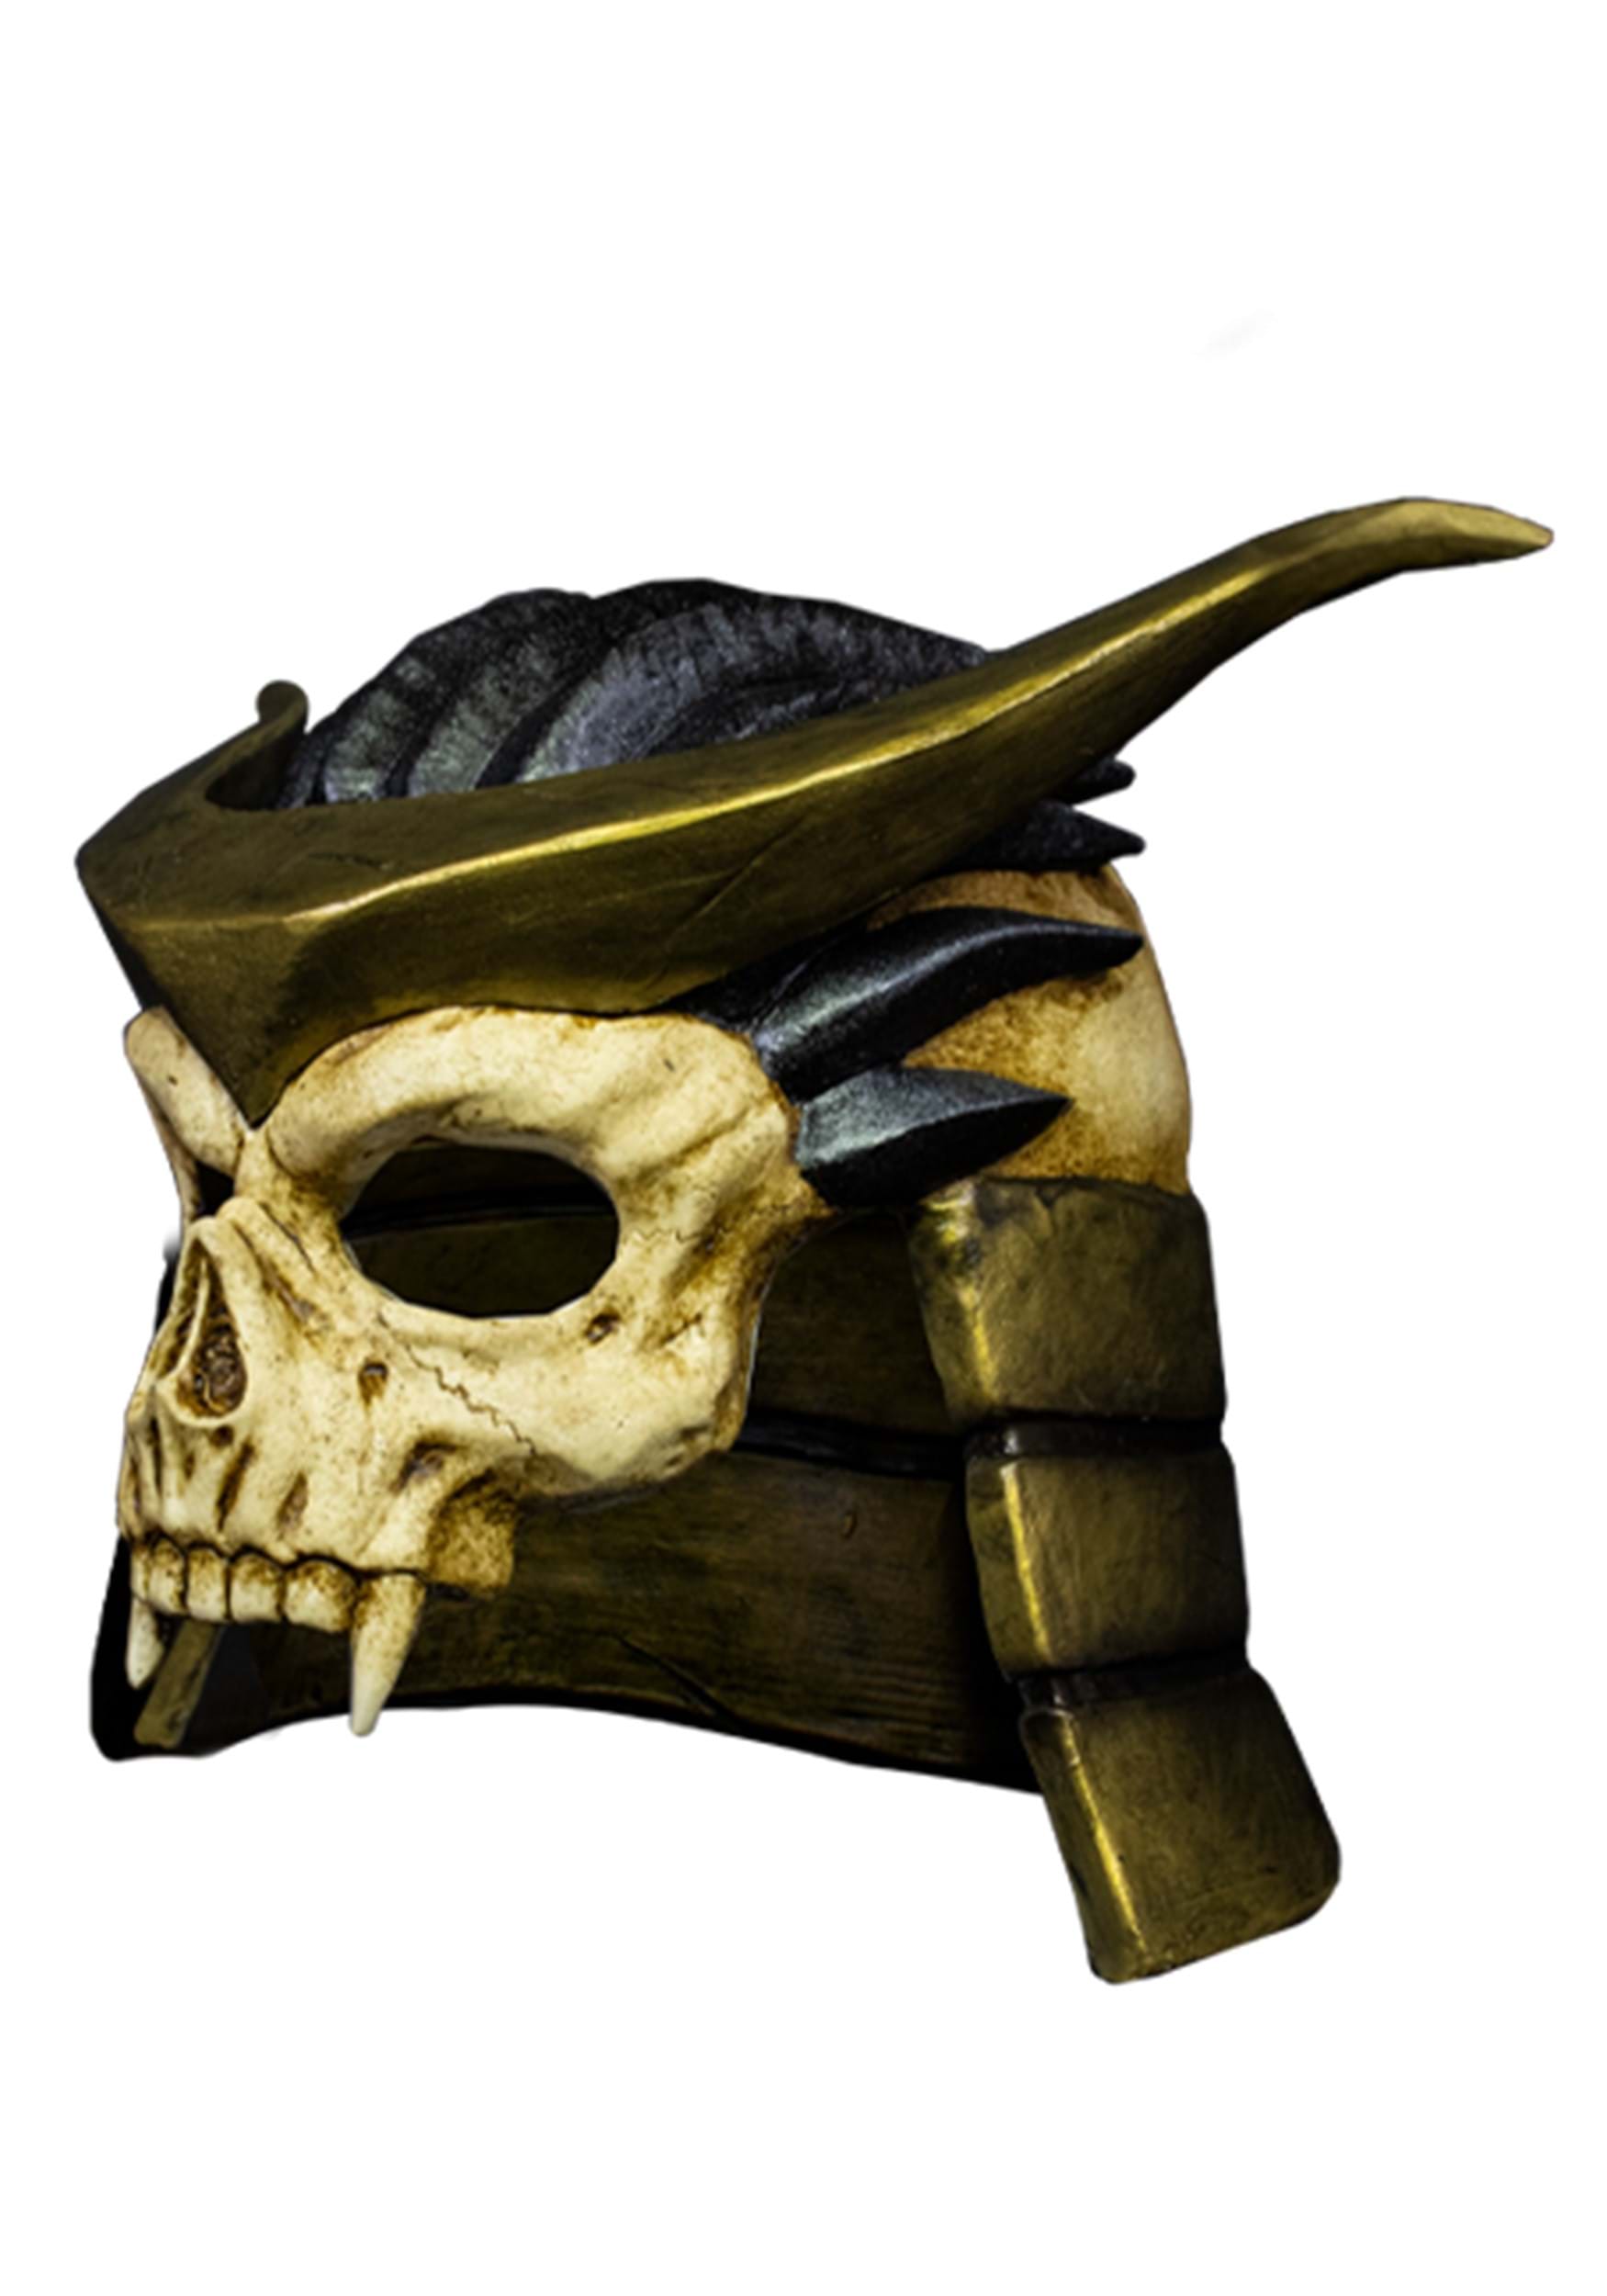 Mortal Kombat Shao Kahn Halloween Mask